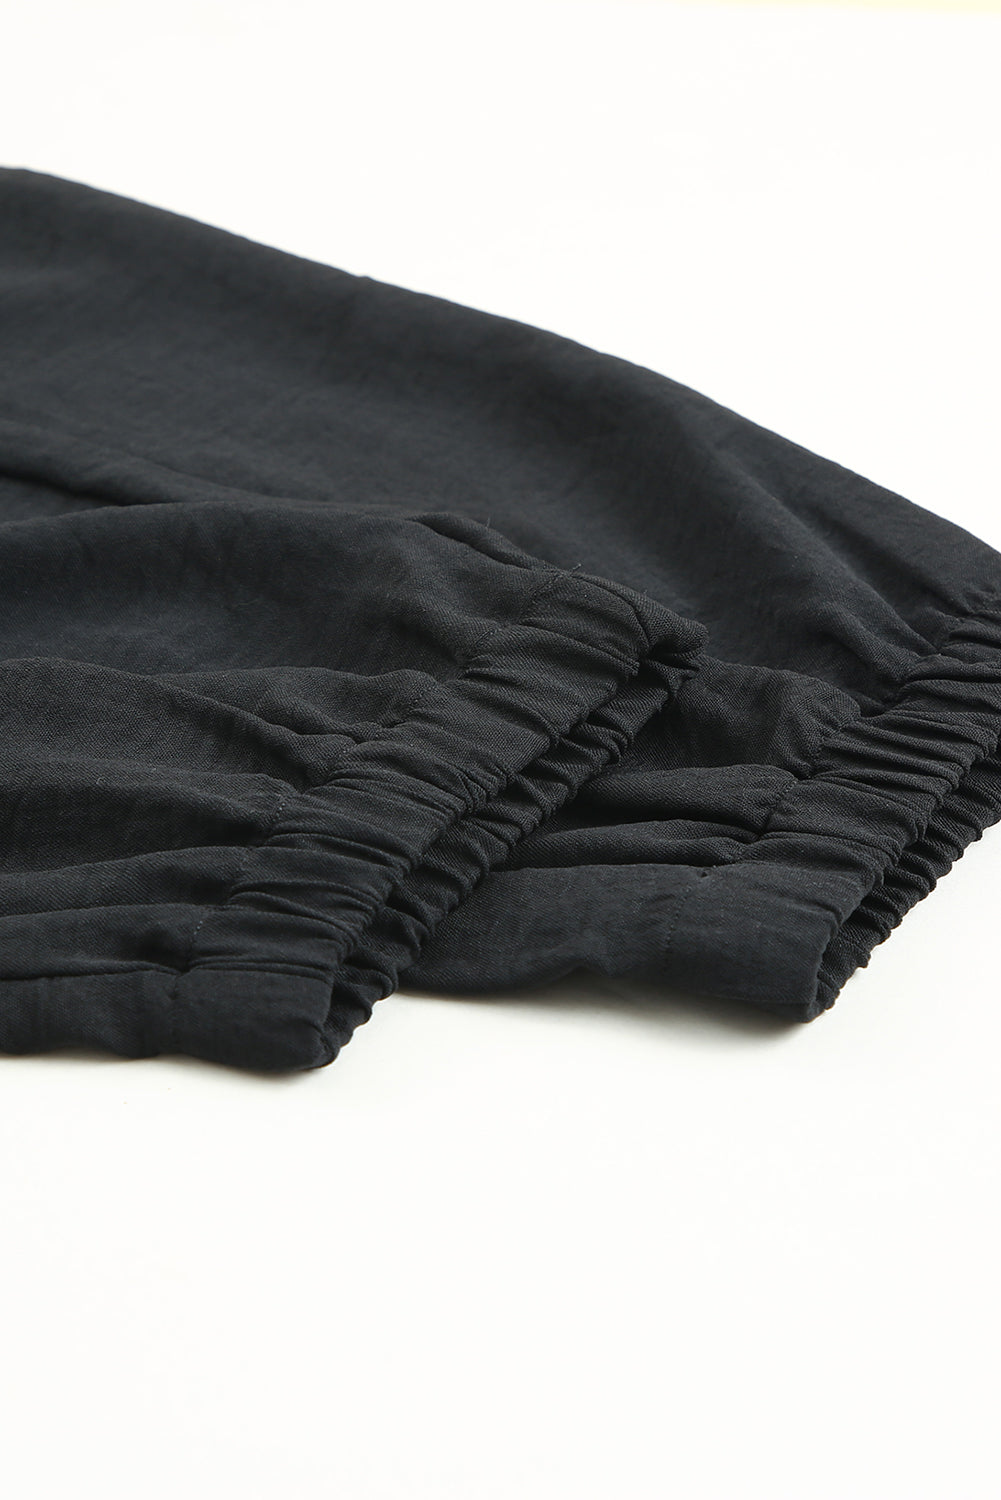 Black Solid Color Drawstring Smocked Waist Womens Pants Joggers - US2EInc Apparel Plug Ltd. Co